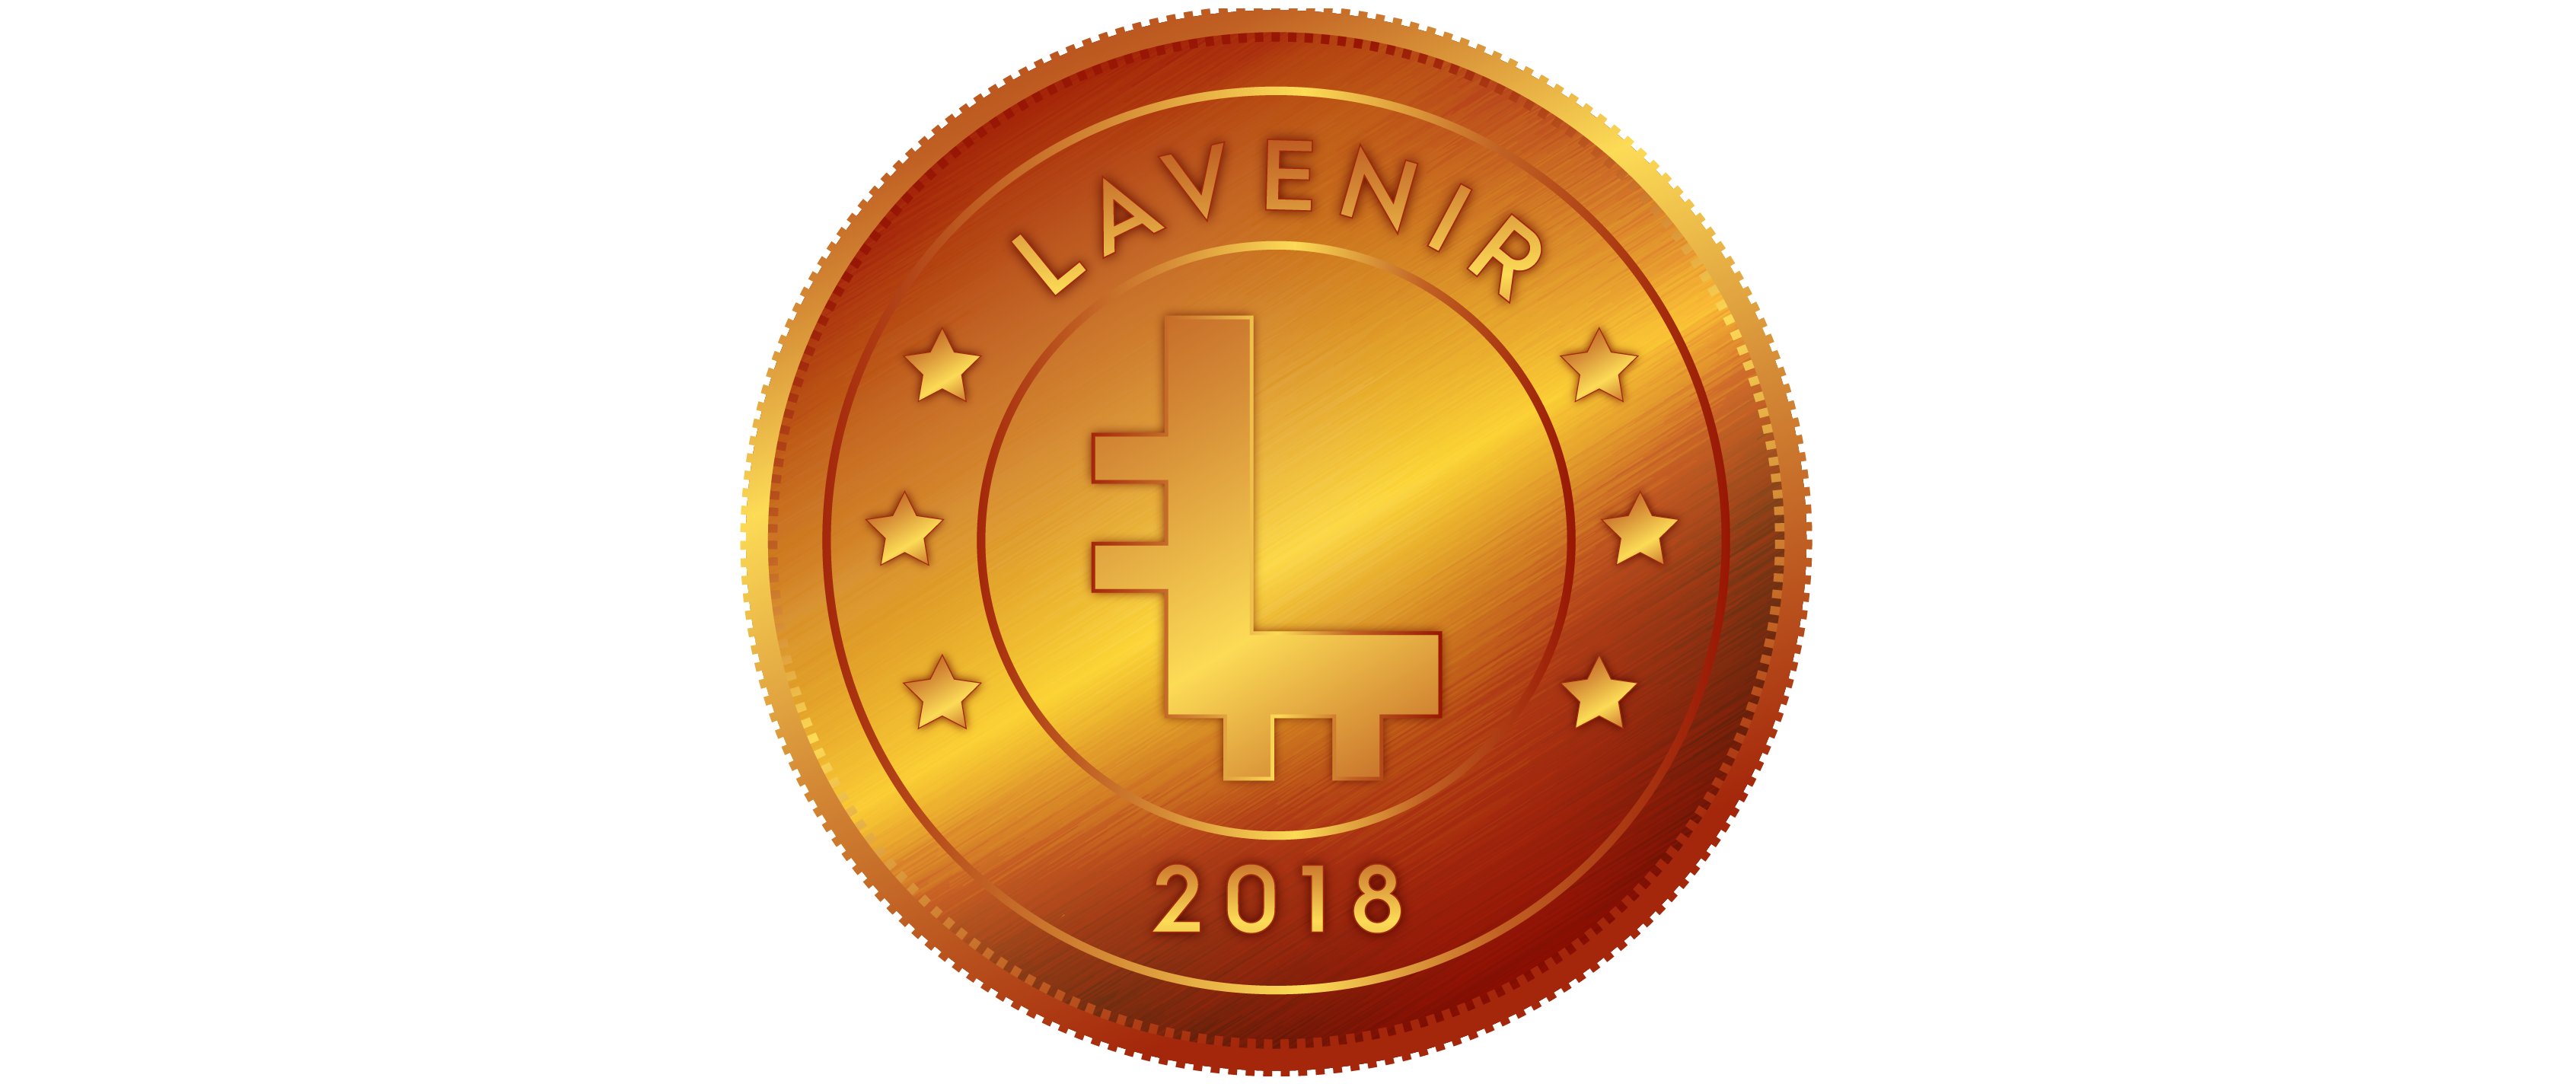 Lavenir, the Cryptocurrency Lending Platform